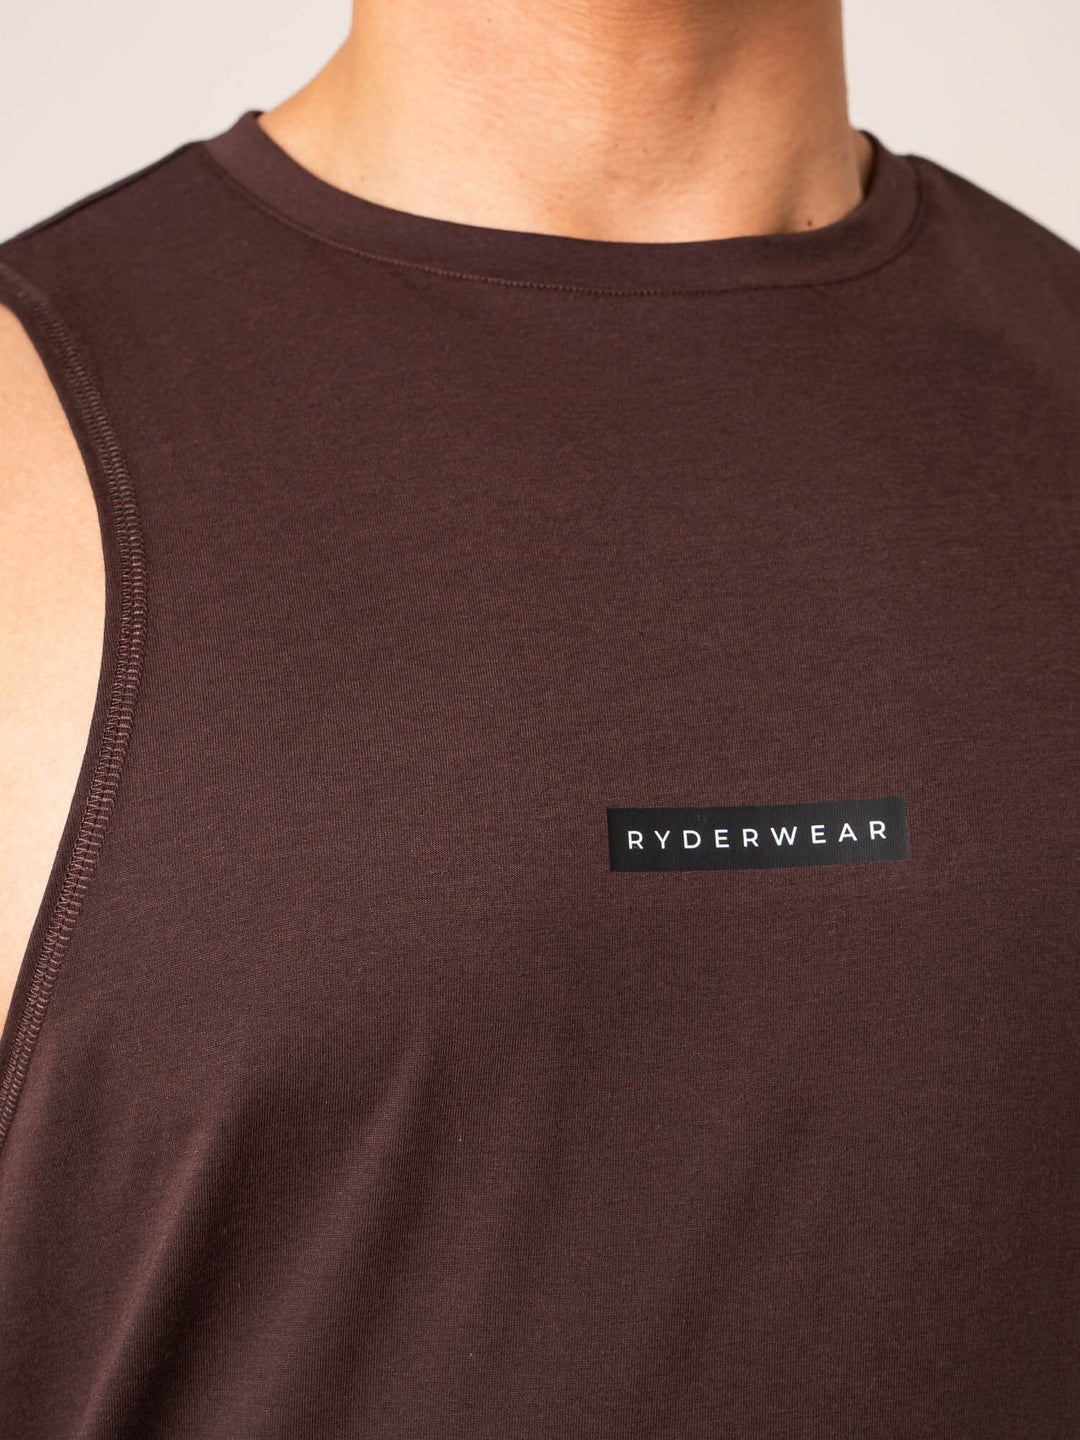 Terrain Tank - Dark Oak Clothing Ryderwear 